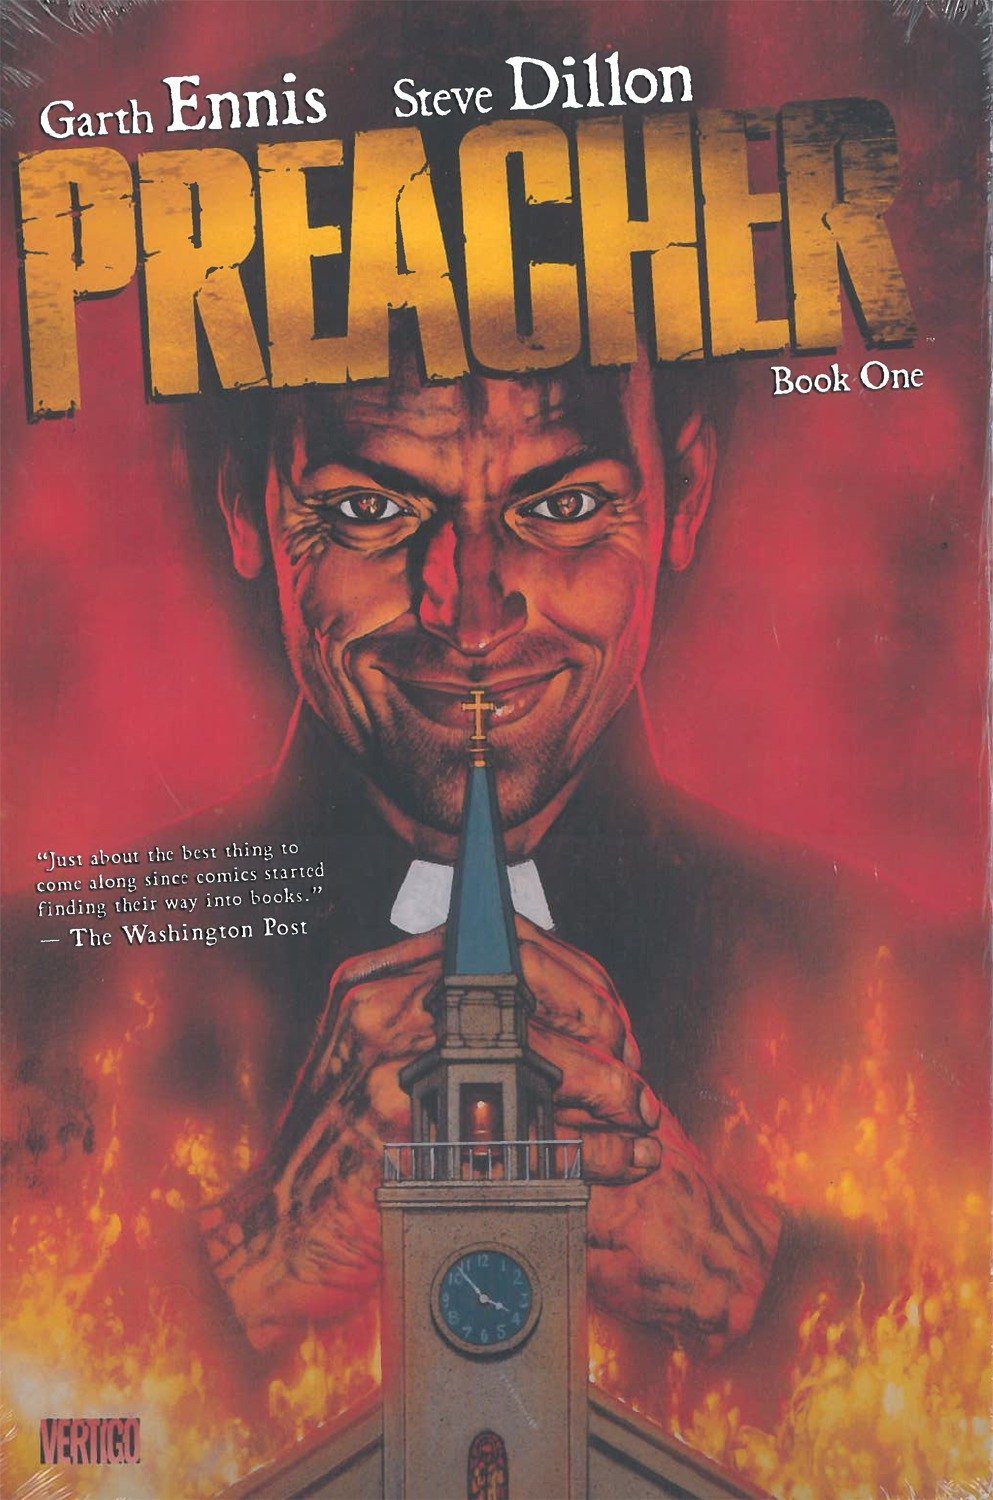 Preacher book cover